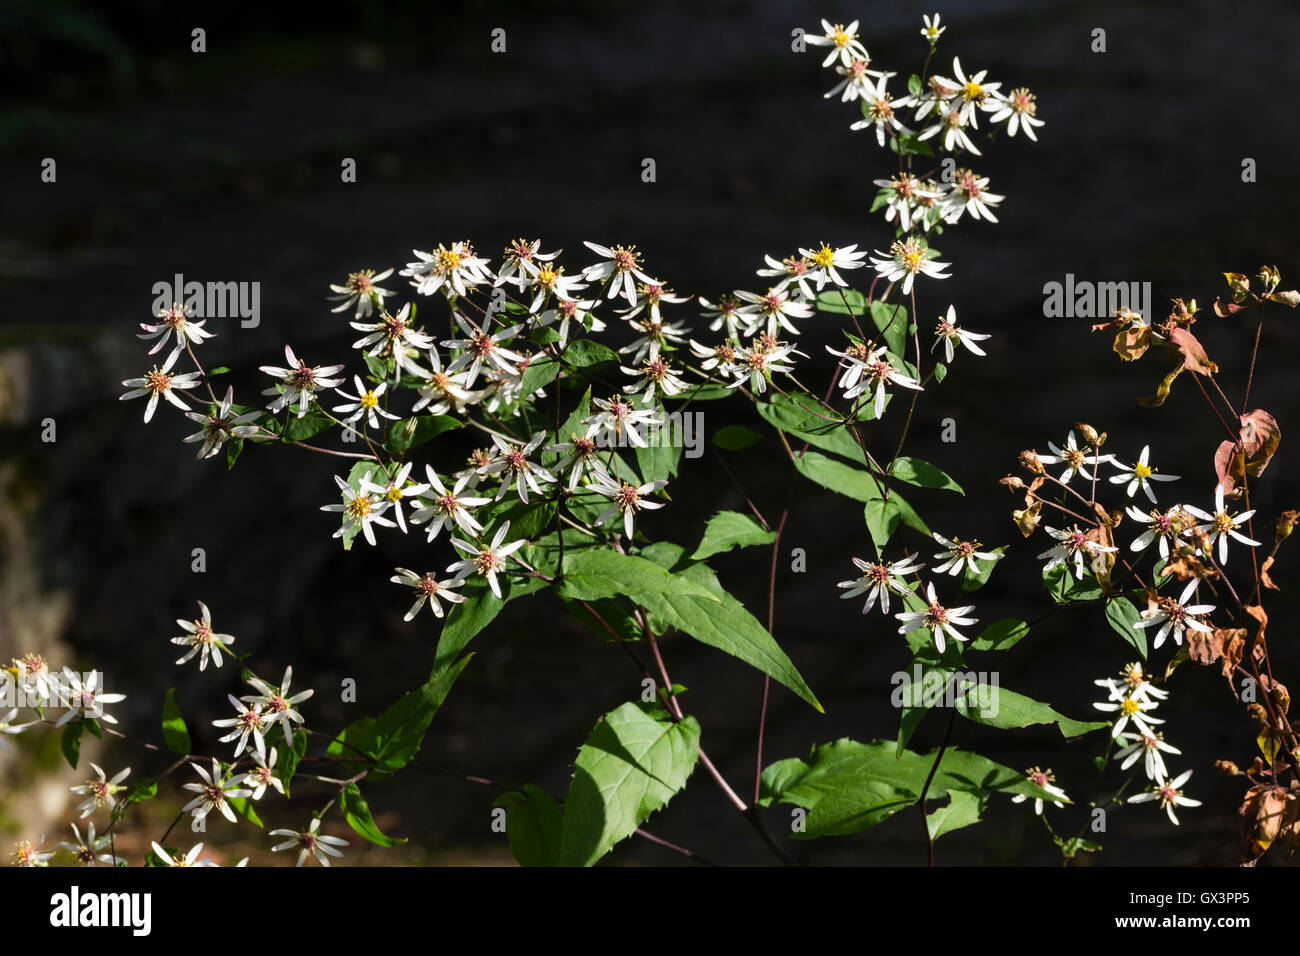 Sprays of small, white petalled daisy flowers of the perennial Eurybia divaricata (Aster divaricatus) Stock Photo